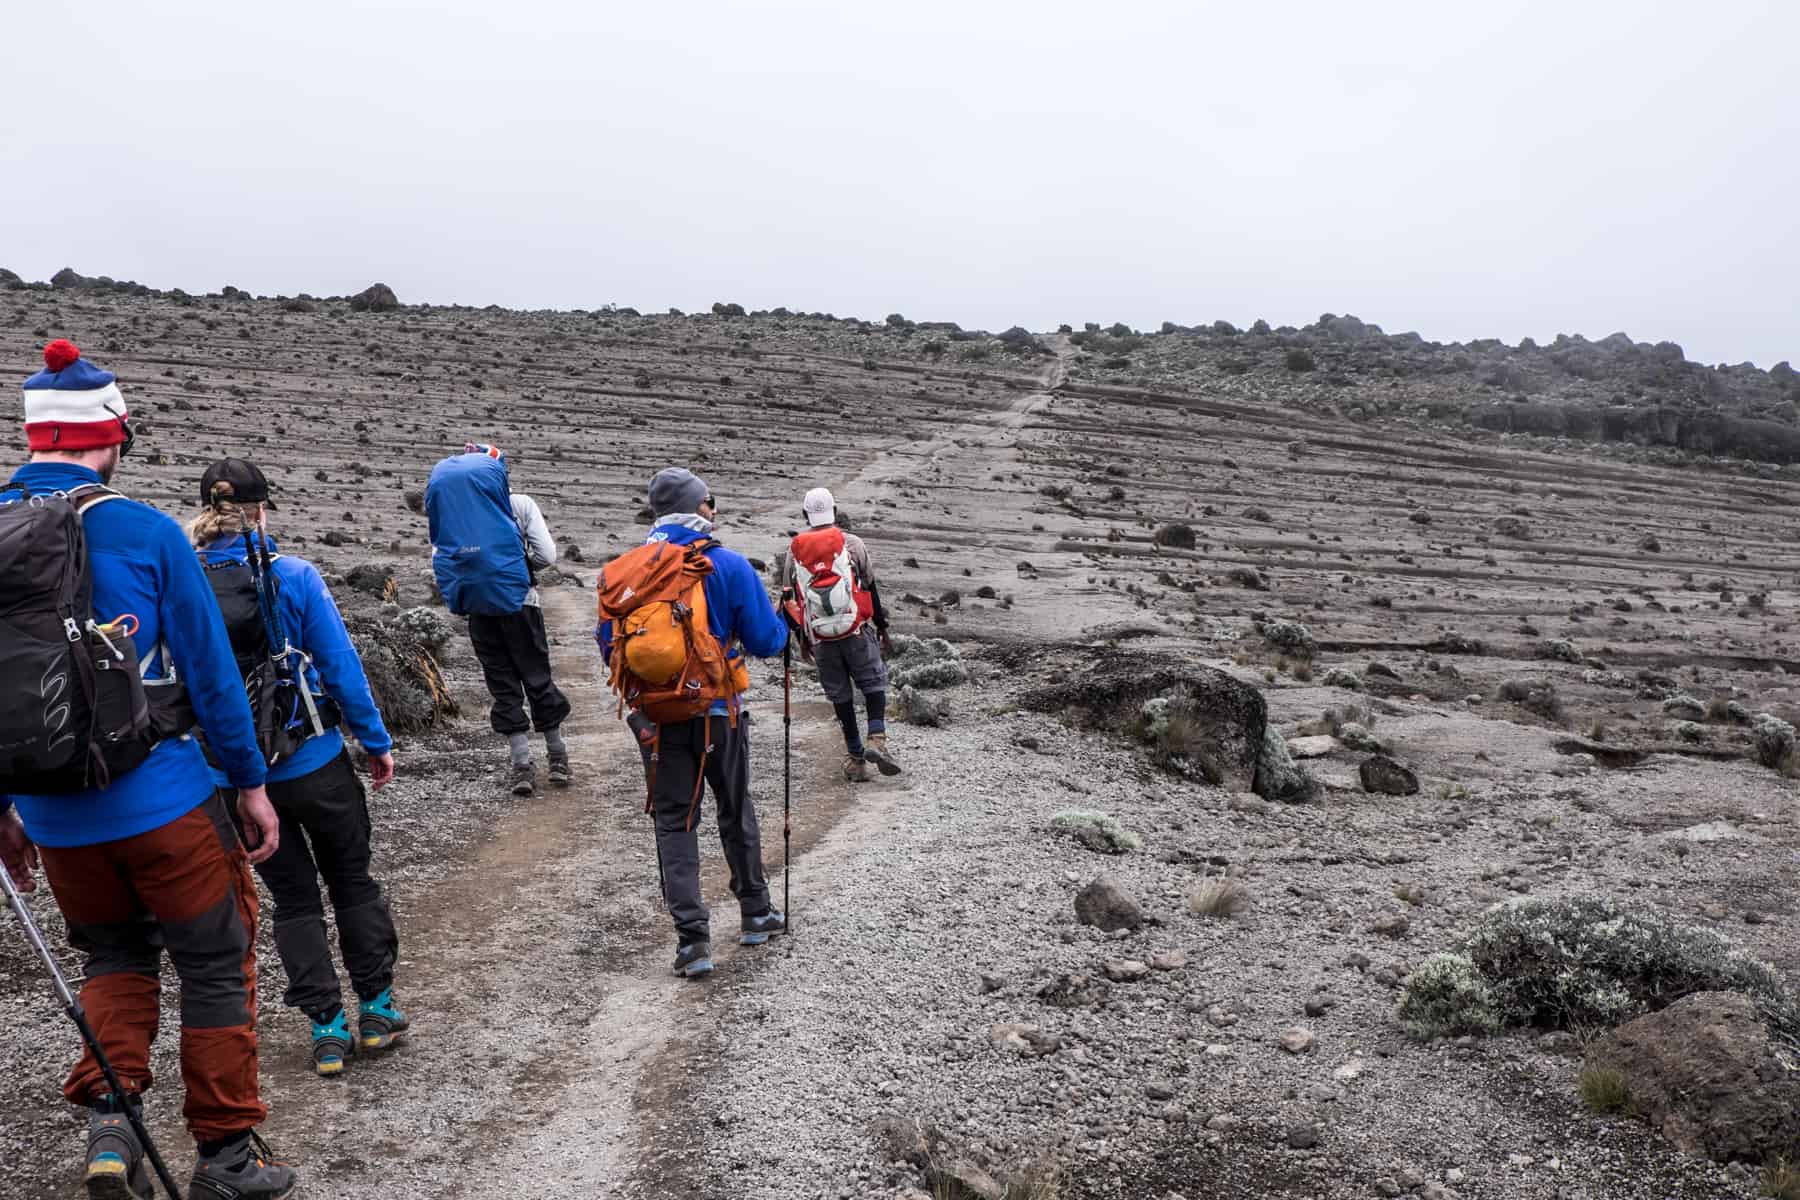 Five people hiking Kilimanjaro, up a grey barren path with small dark rocks and towards a flat ridge.